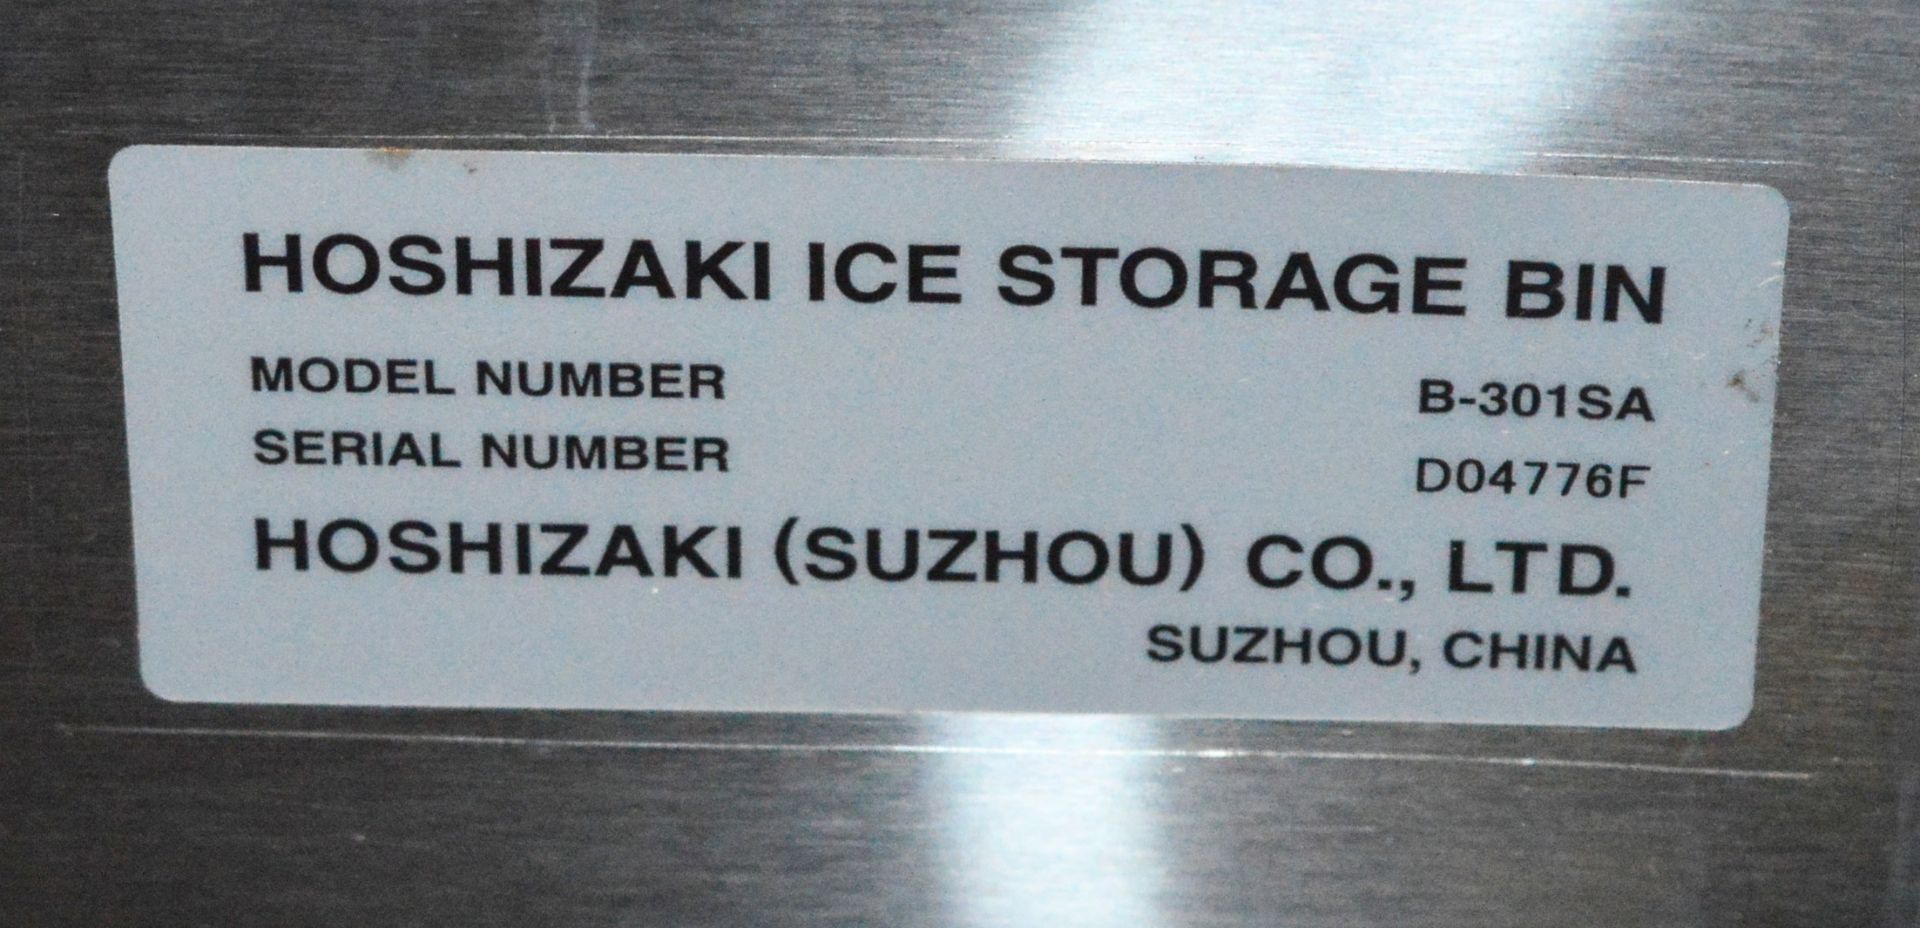 1 x Hoshizaki Air Cool Ice Maker Modular Storage Bin - Impressive 144kg Storage Capacity - - Image 4 of 8